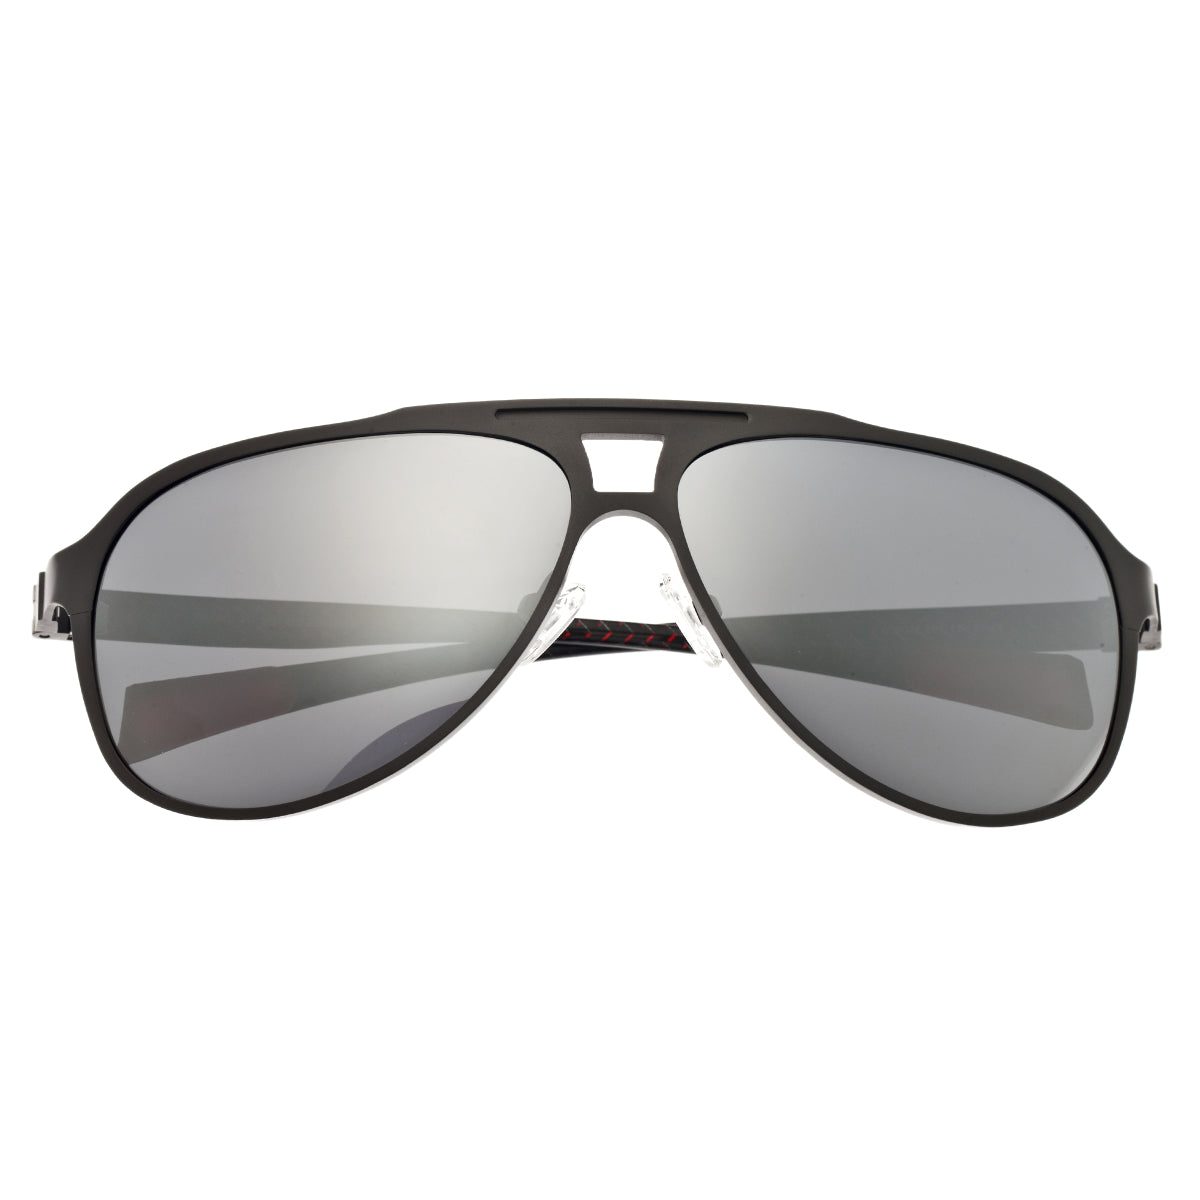 Breed Apollo Titanium and Carbon Fiber Polarized Sunglasses - Gunmetal/Silver - BSG006GM